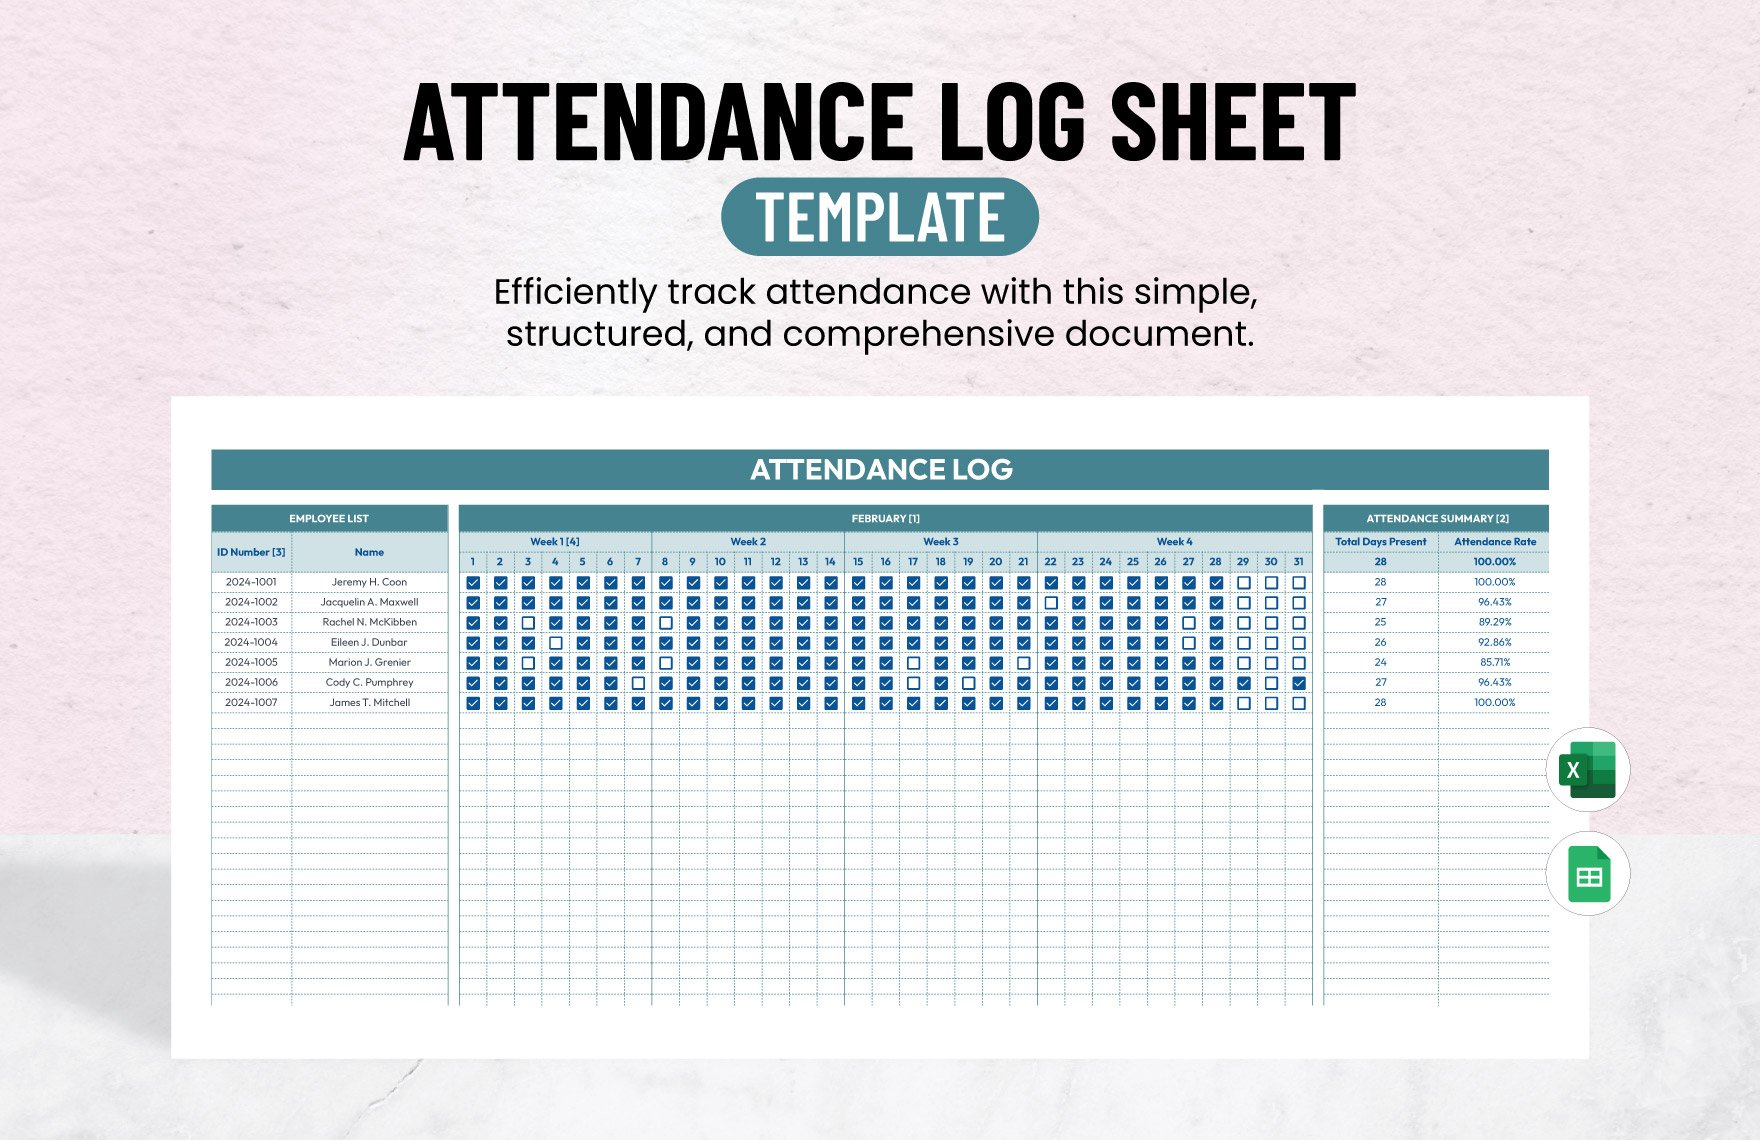 Attendance Log Sheet Template in Excel, Google Sheets